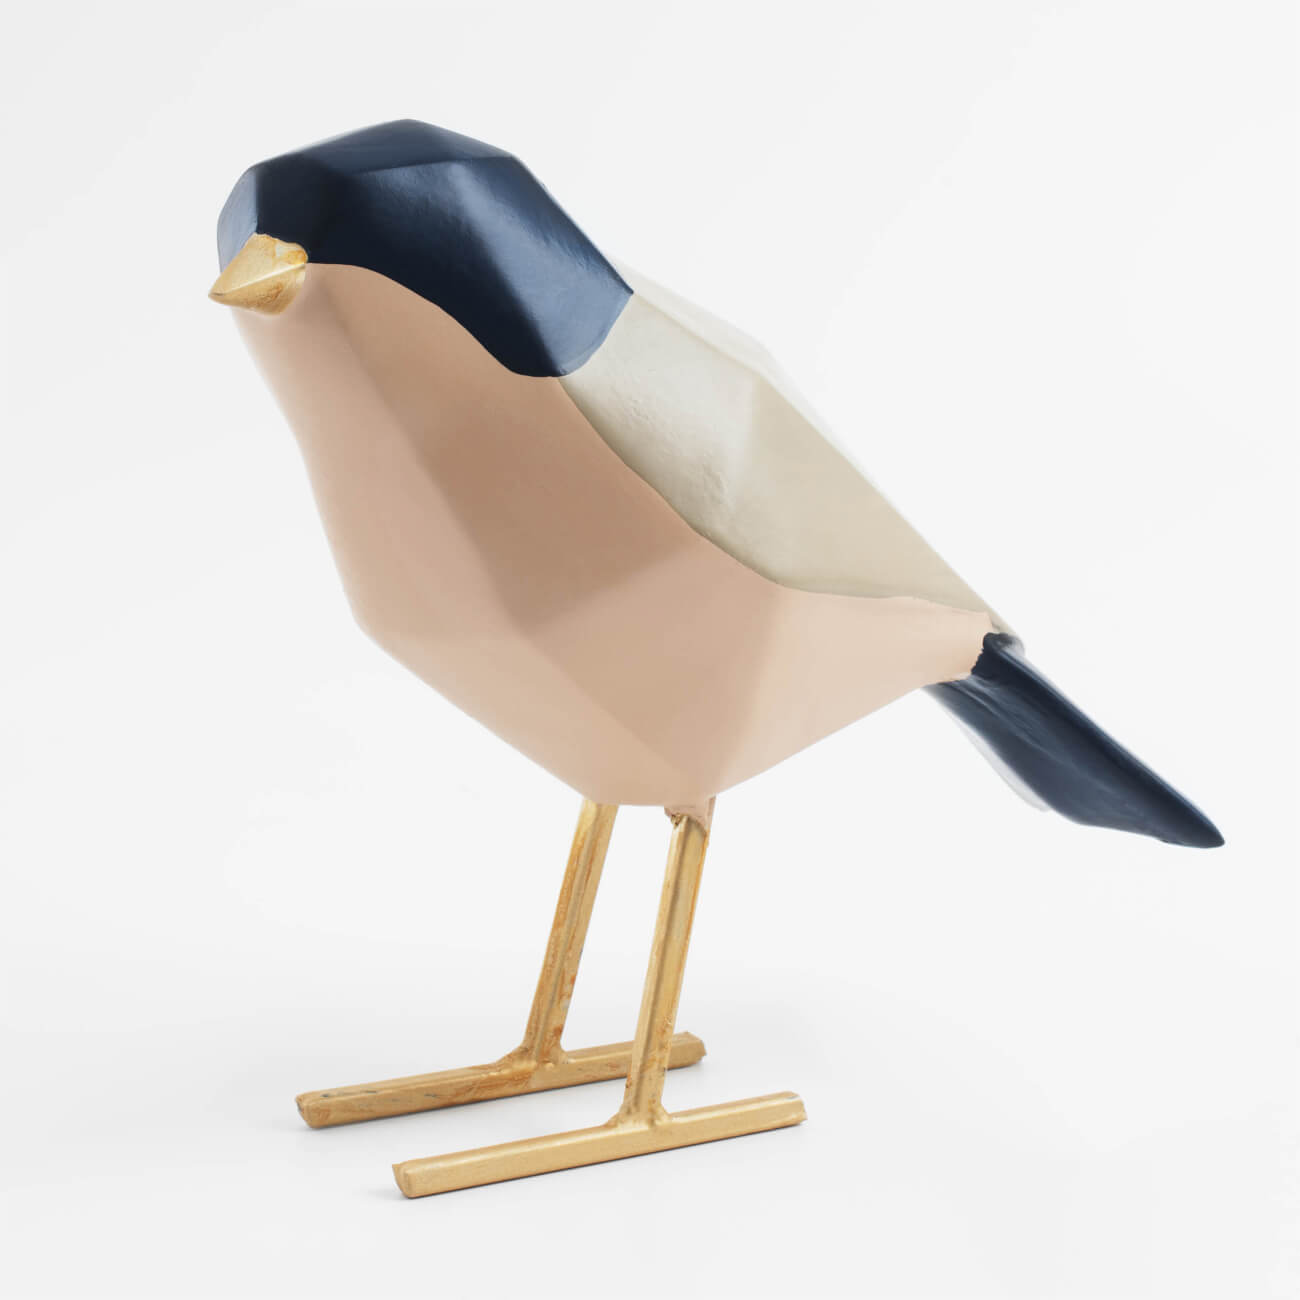 Статуэтка, 20 см, полирезин, бежевая, Птица, Art modern